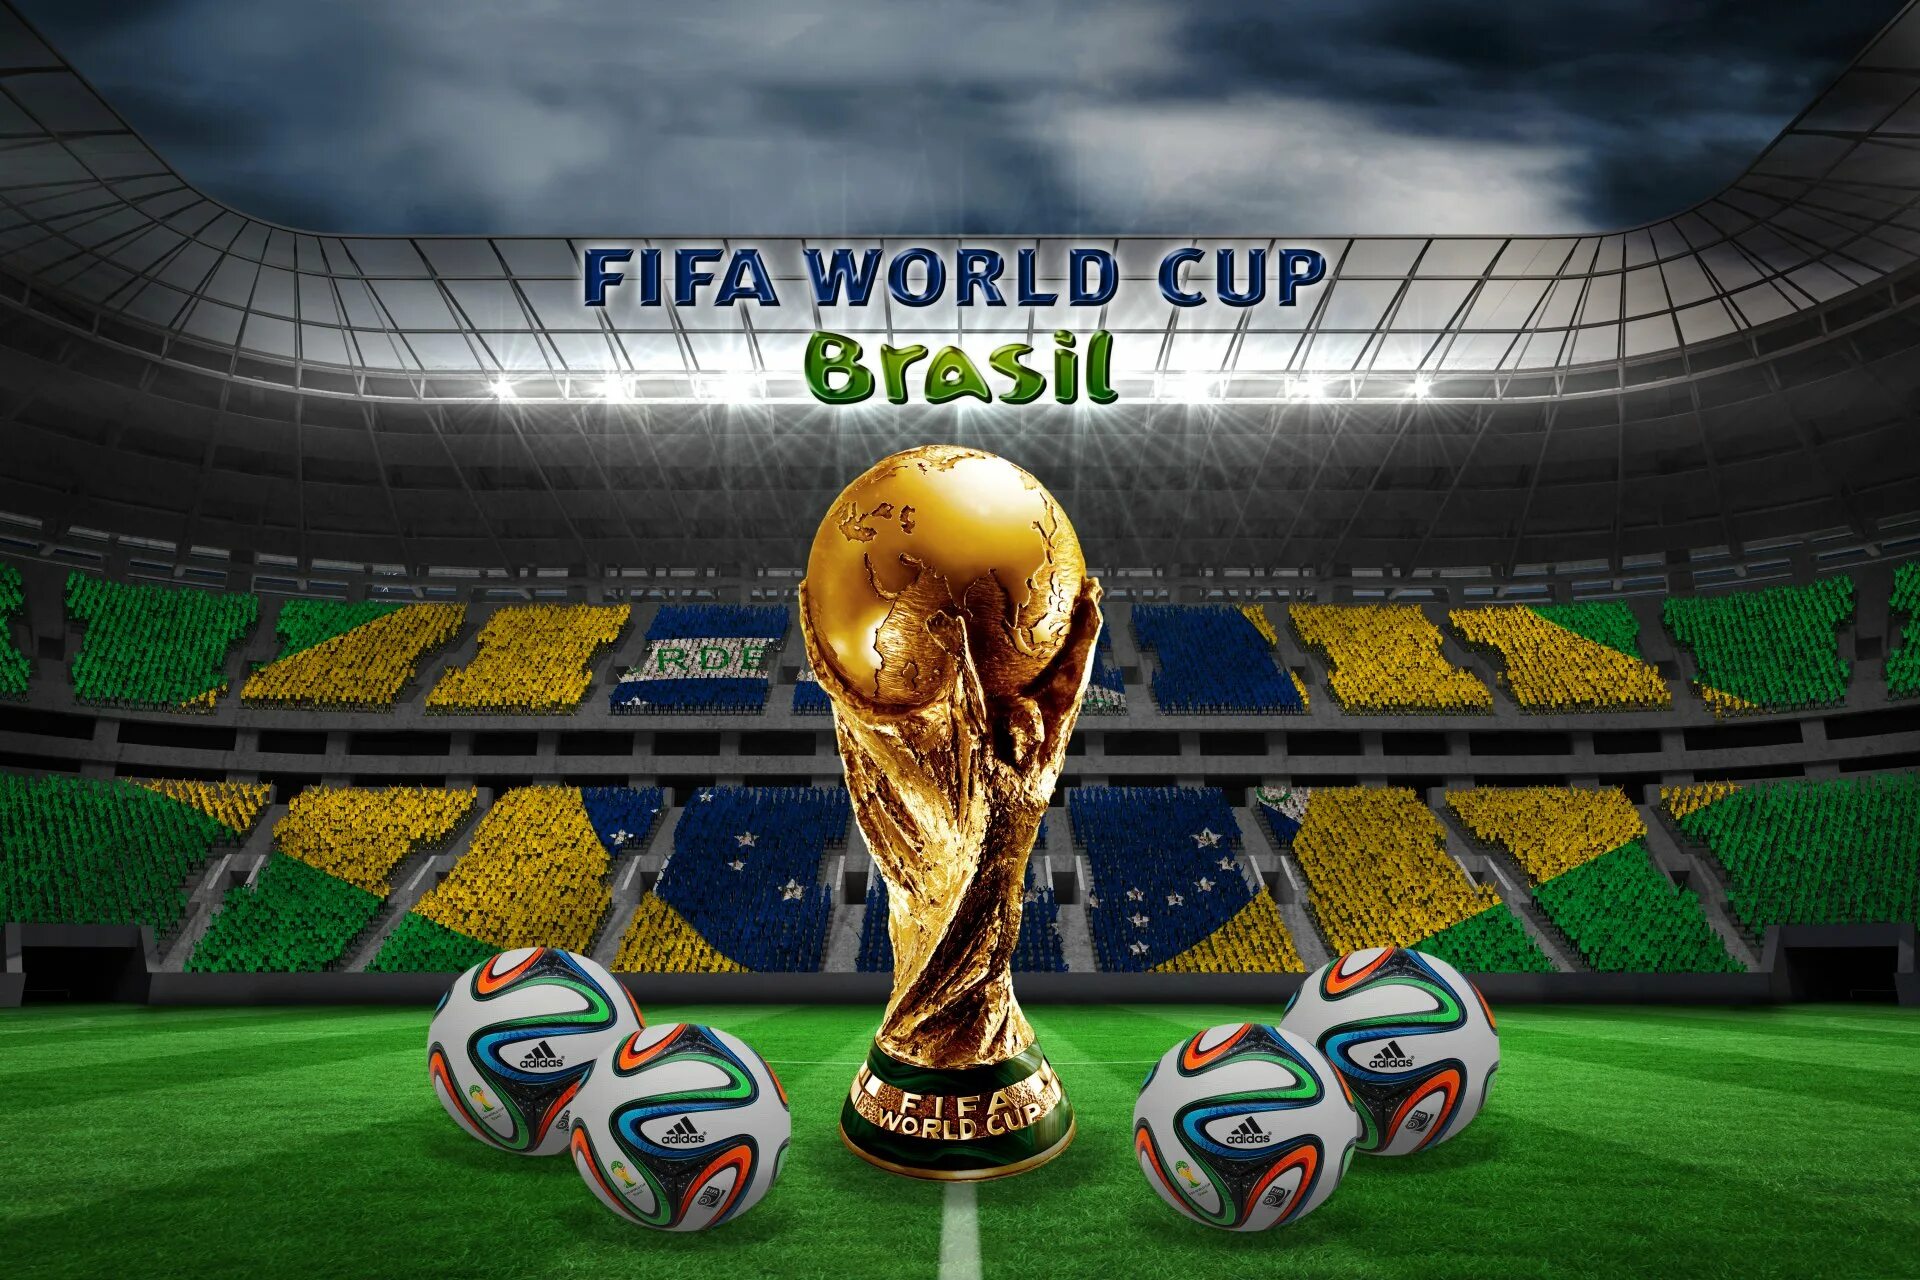 World cup 2. ФИФА 2014 Бразилия. Кубок ФИФА ворлд кап. The World Cup 2014 Brazil мяч. FIFA World Cup Brasil 2014 Brazuka.